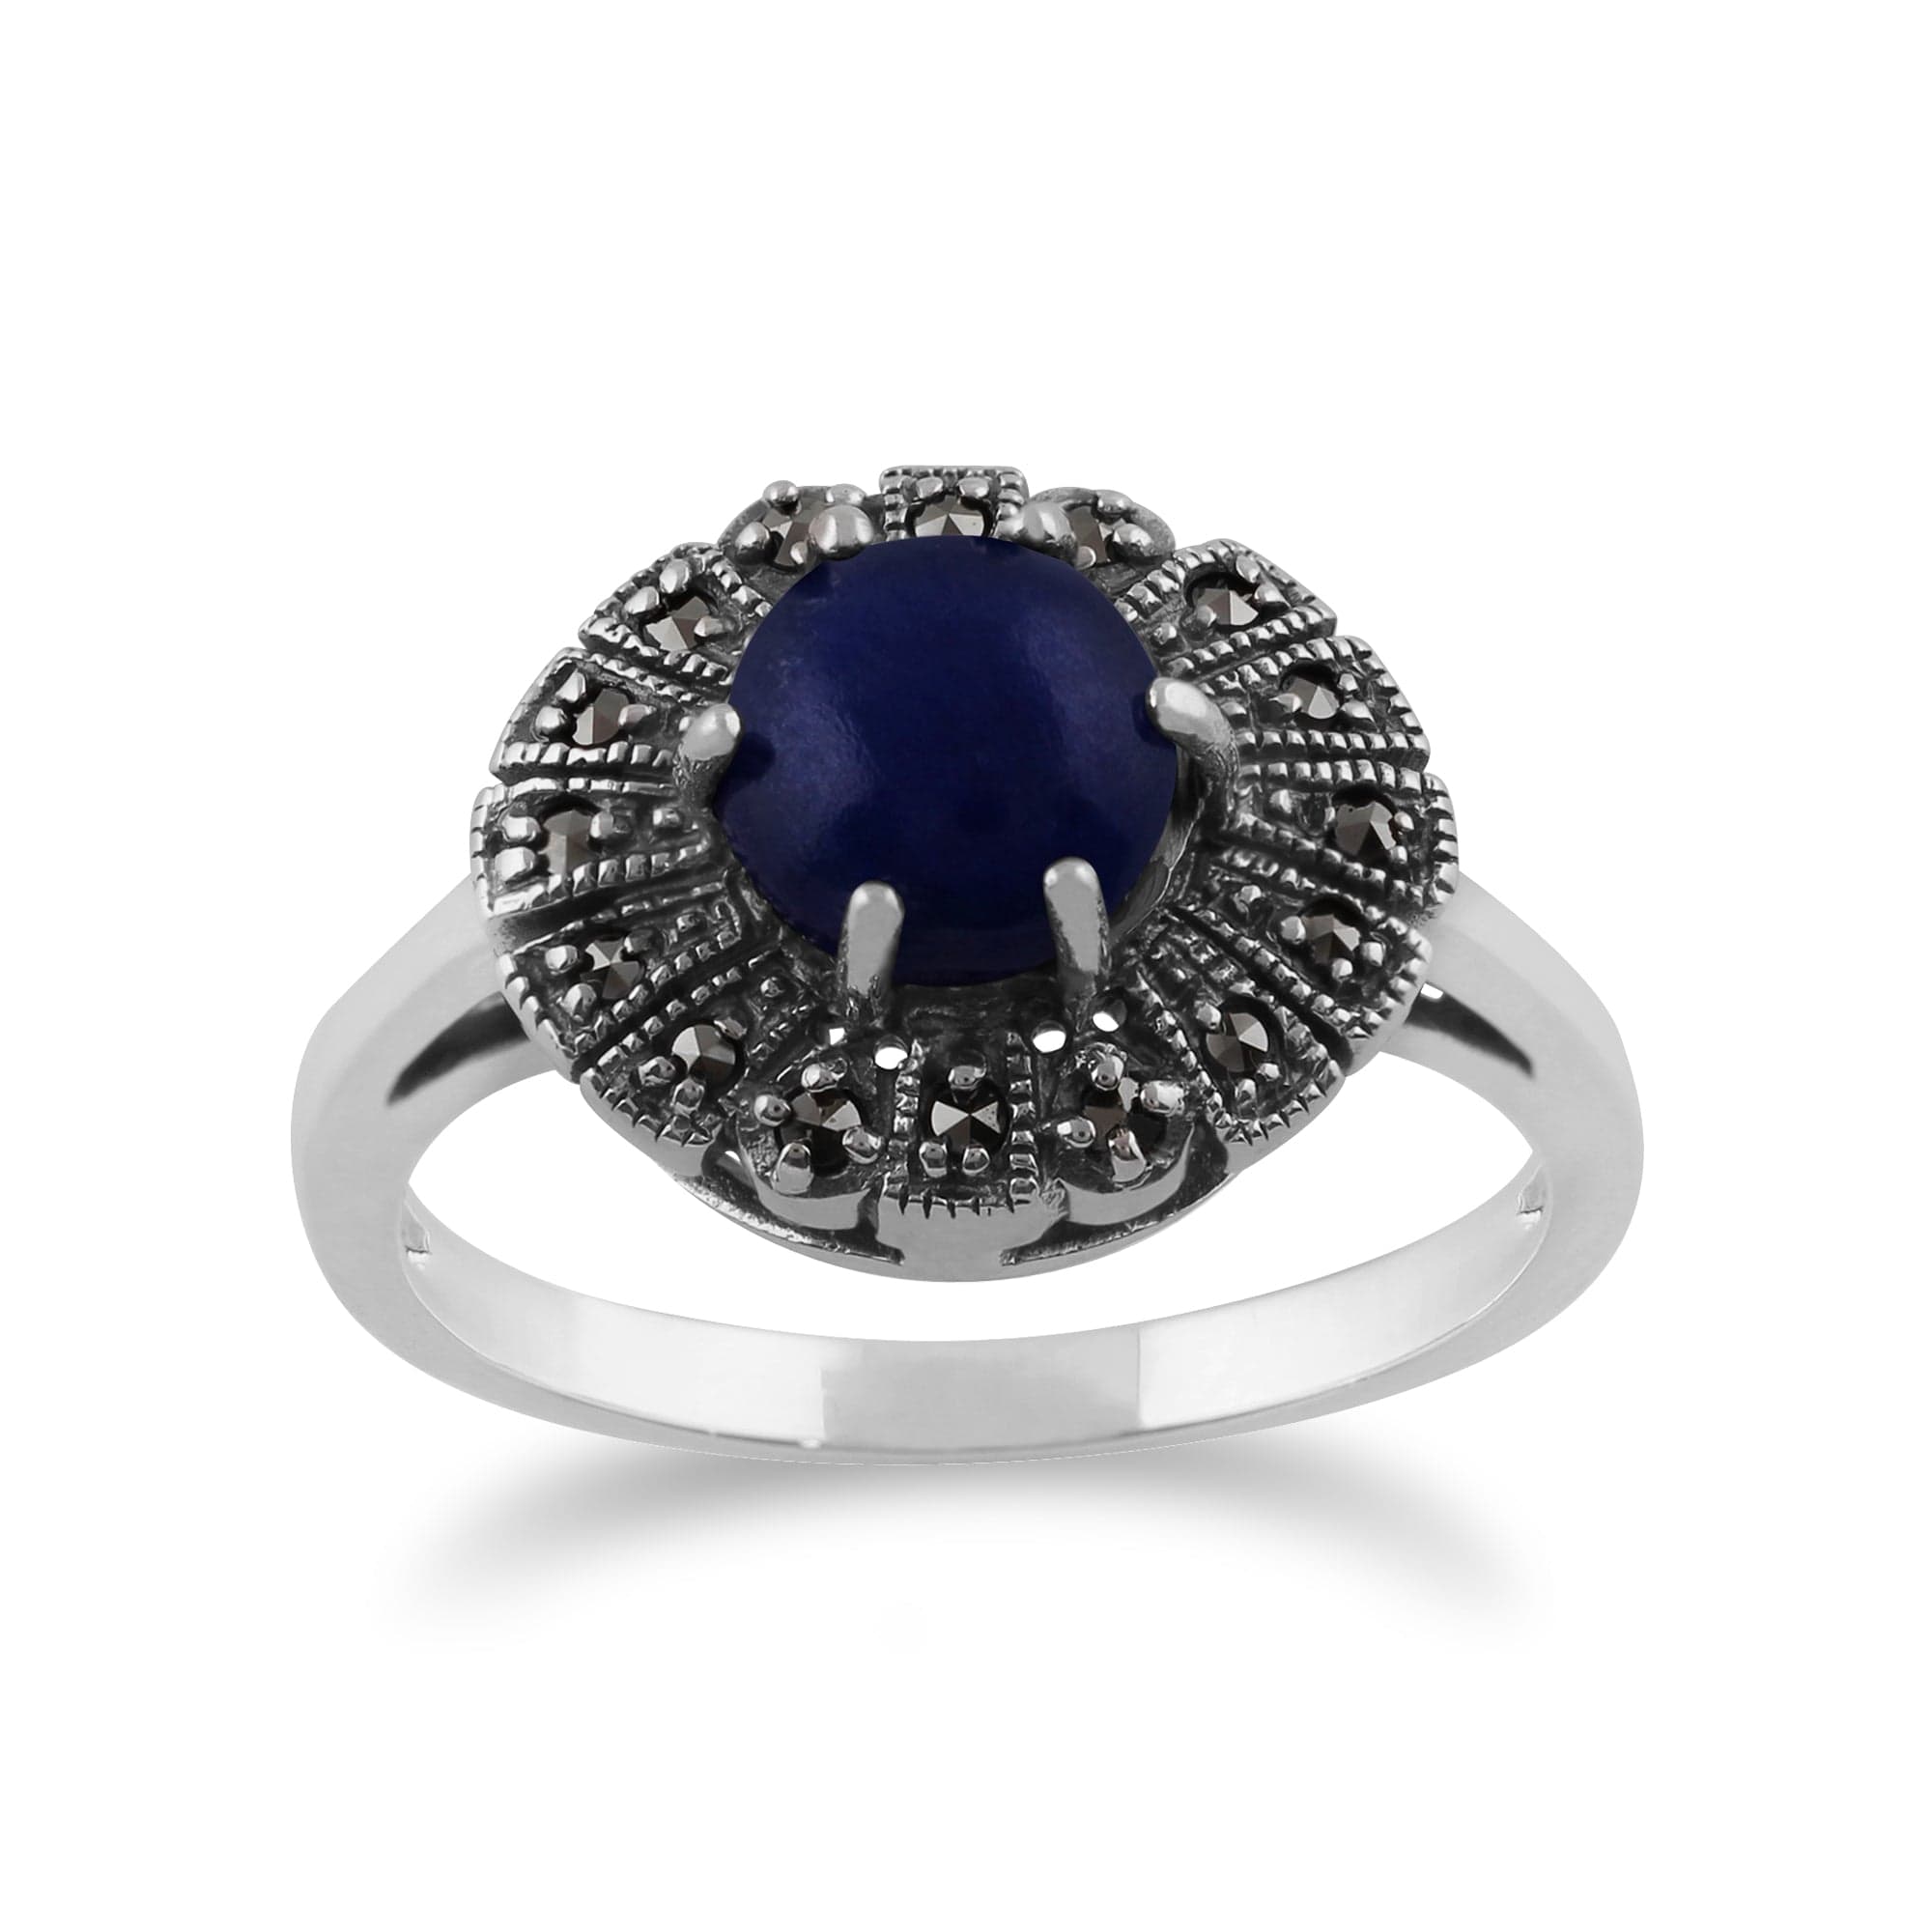 Gemondo 925 Sterling Silver 0.62ct Lapis Lazuli & Marcasite Art Deco Ring Image 1